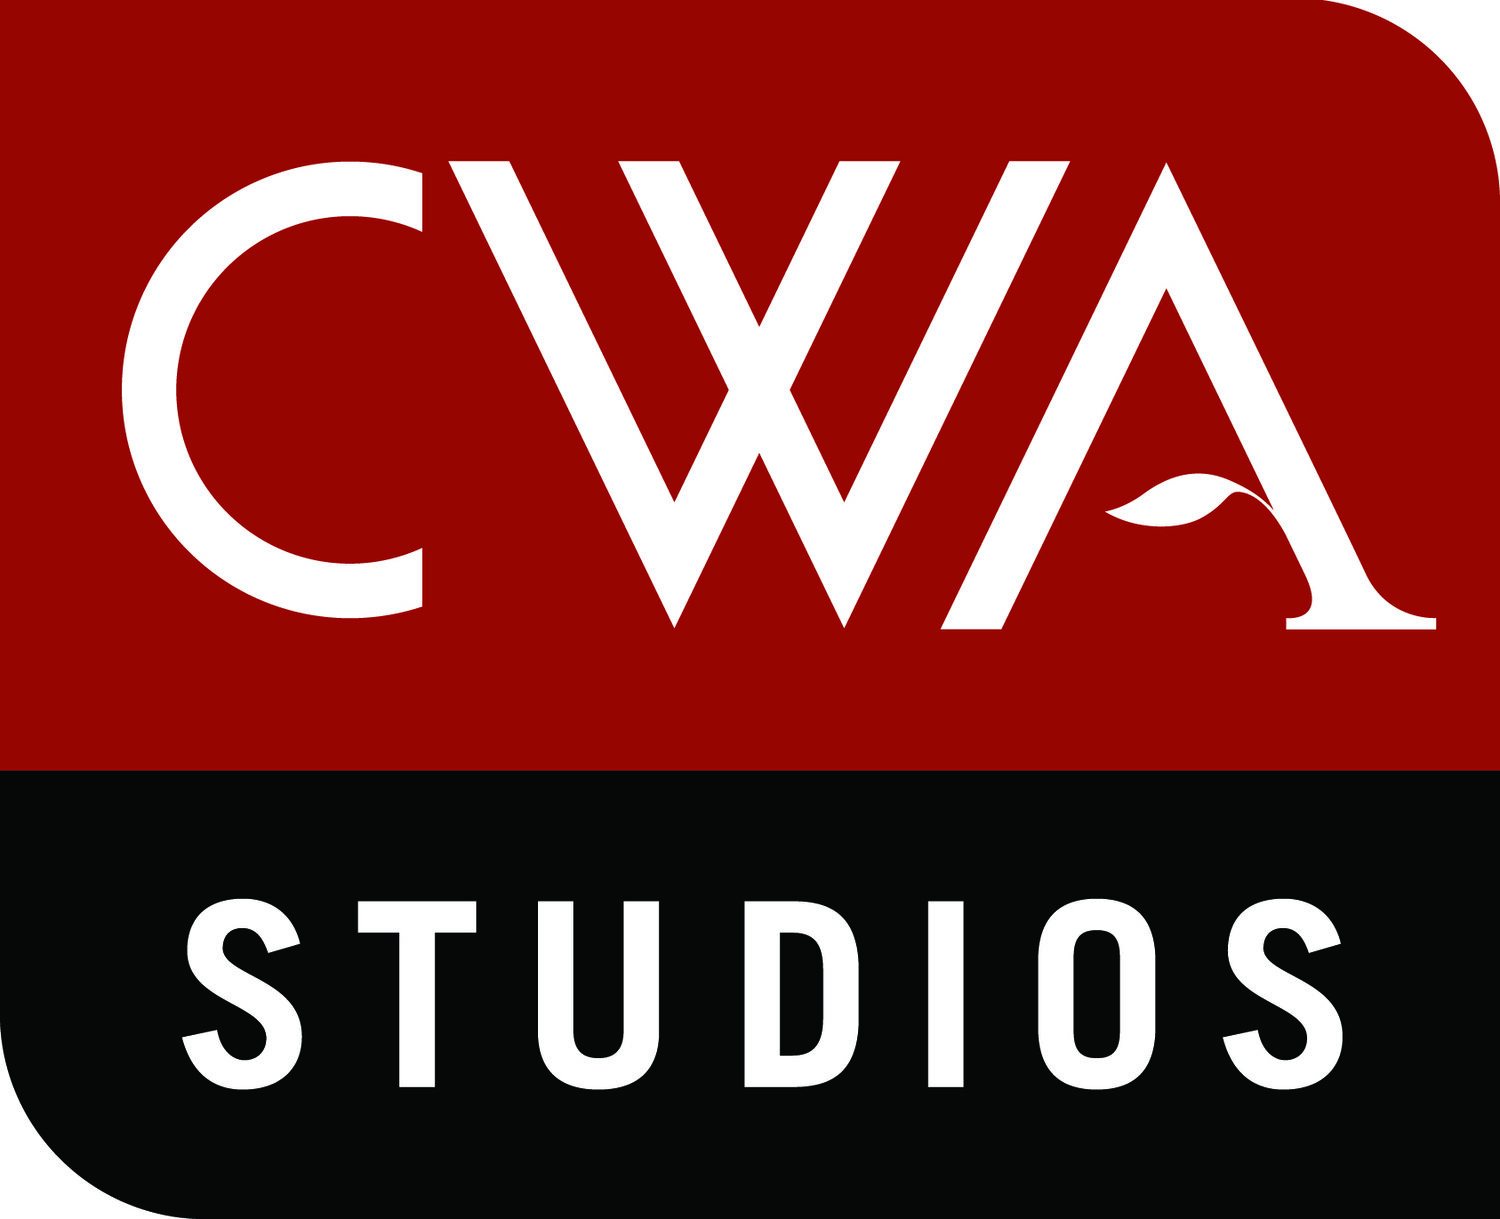 CWA Studios